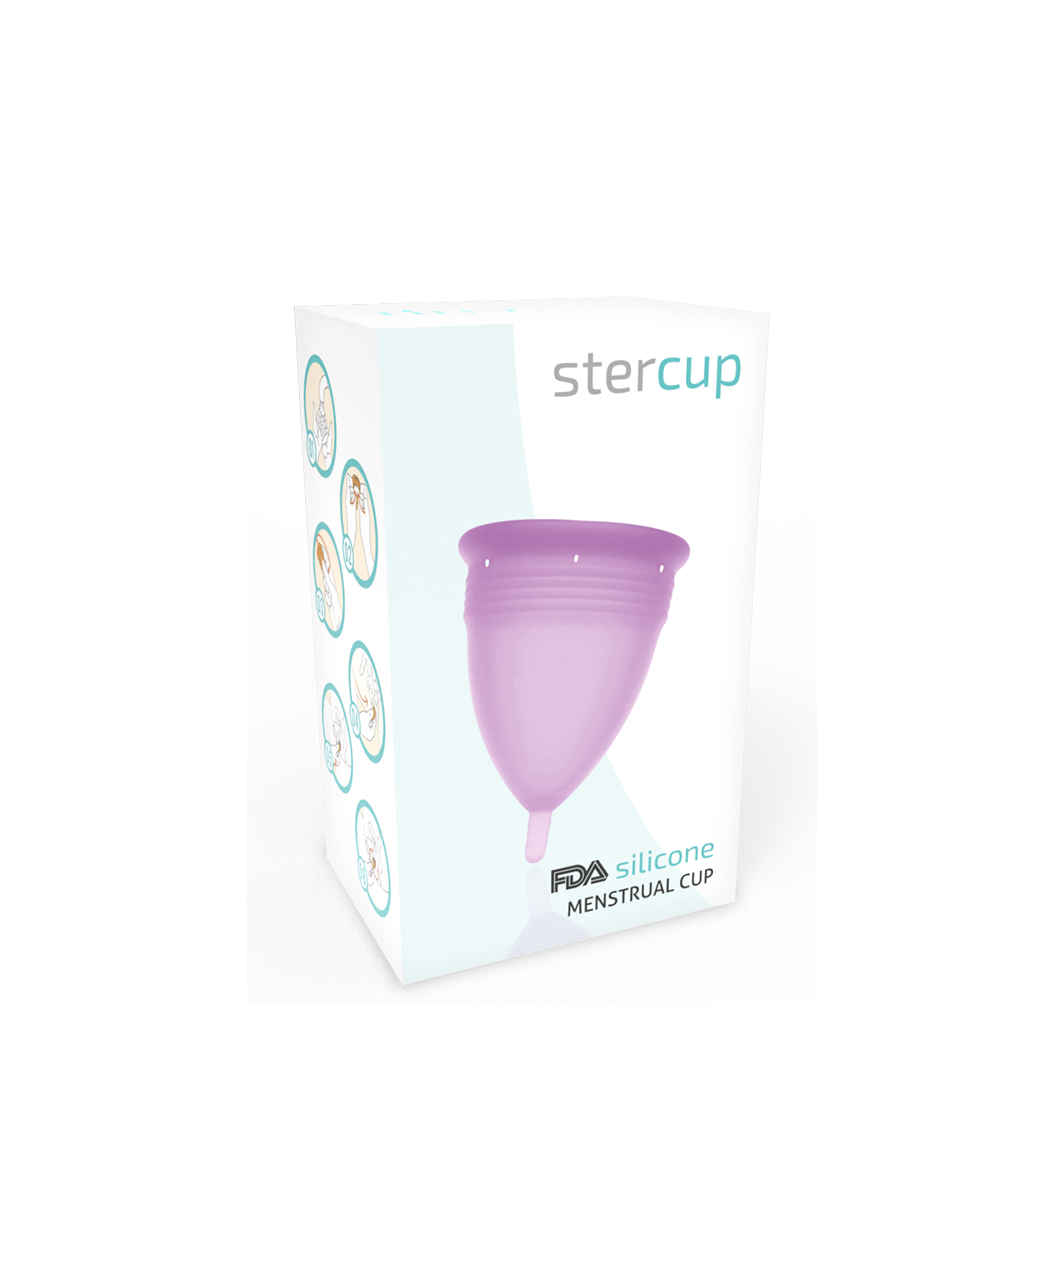 Stercup menstrual cup